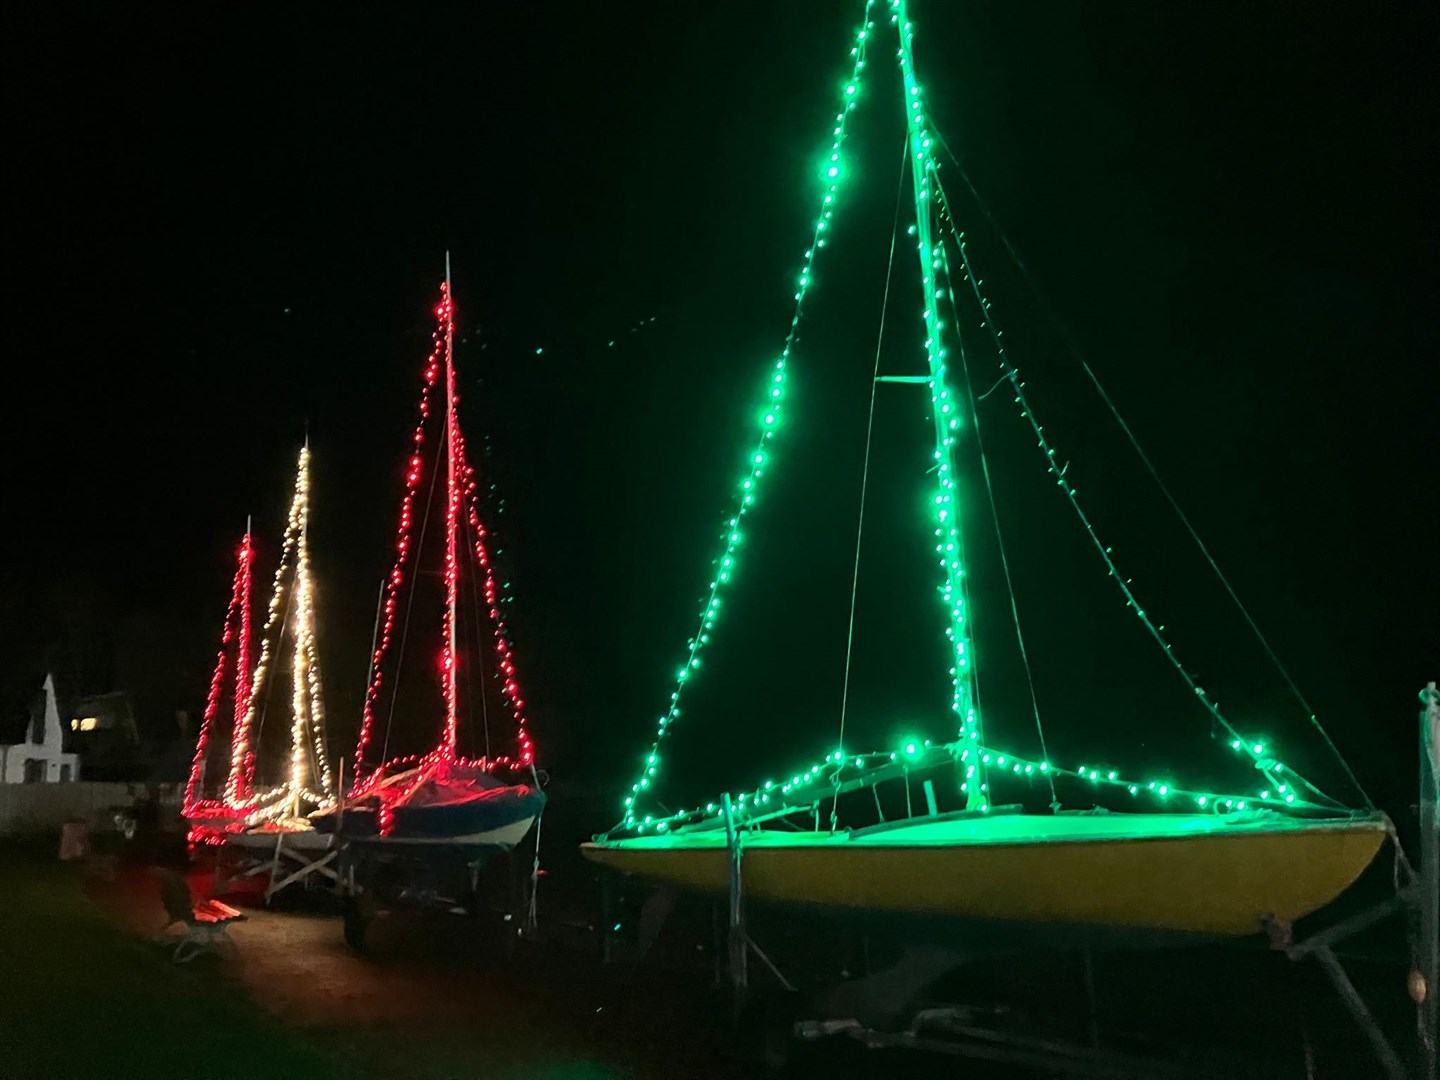 Fairy lights on Ullapool fishing boats.